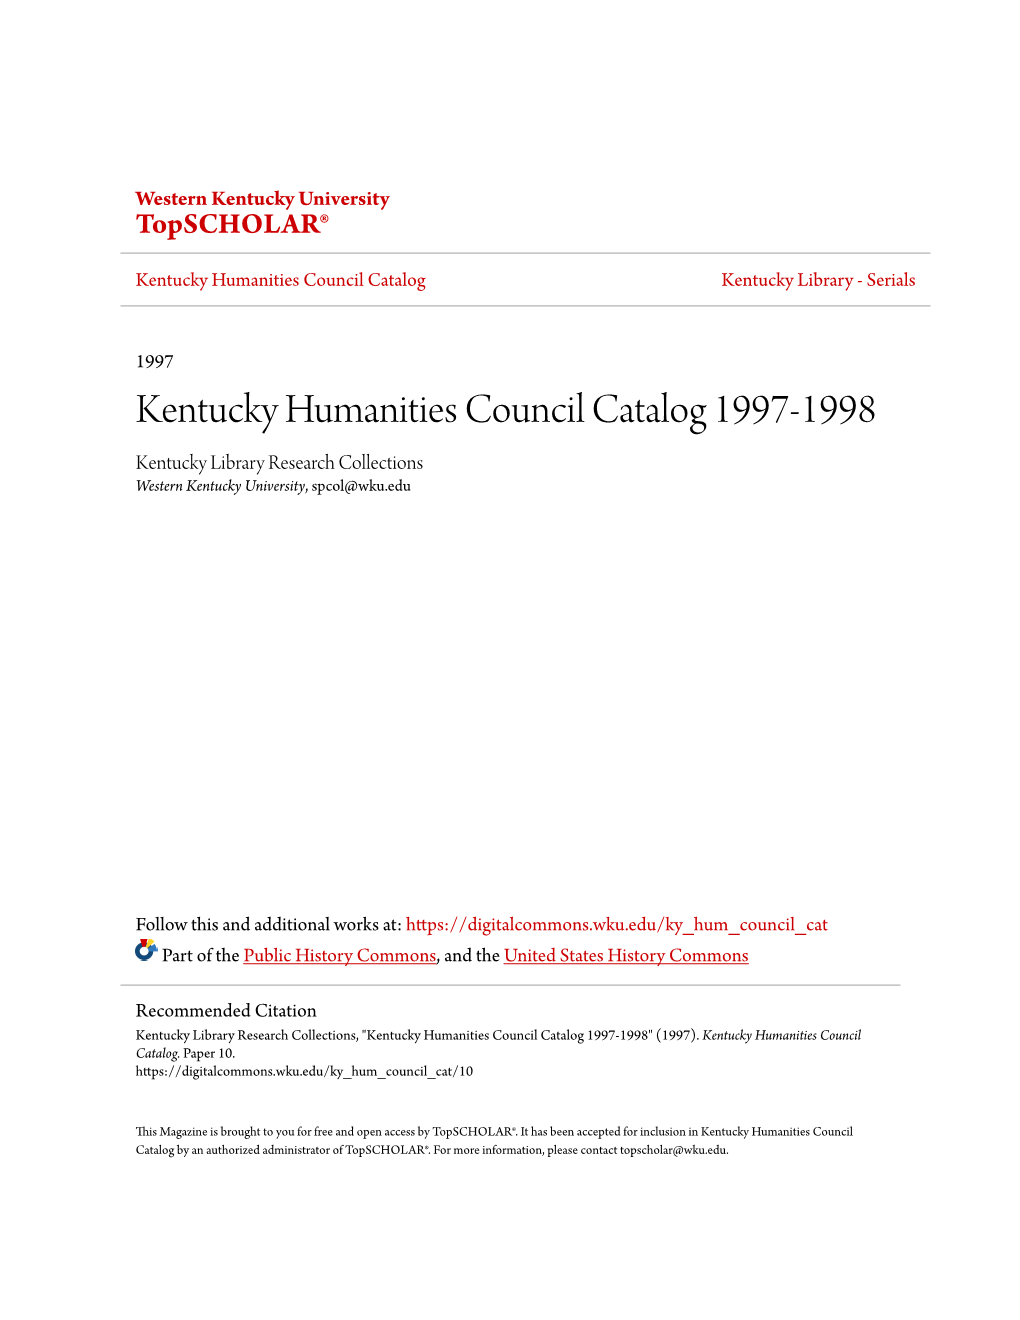 Kentucky Humanities Council Catalog 1997-1998 Kentucky Library Research Collections Western Kentucky University, Spcol@Wku.Edu